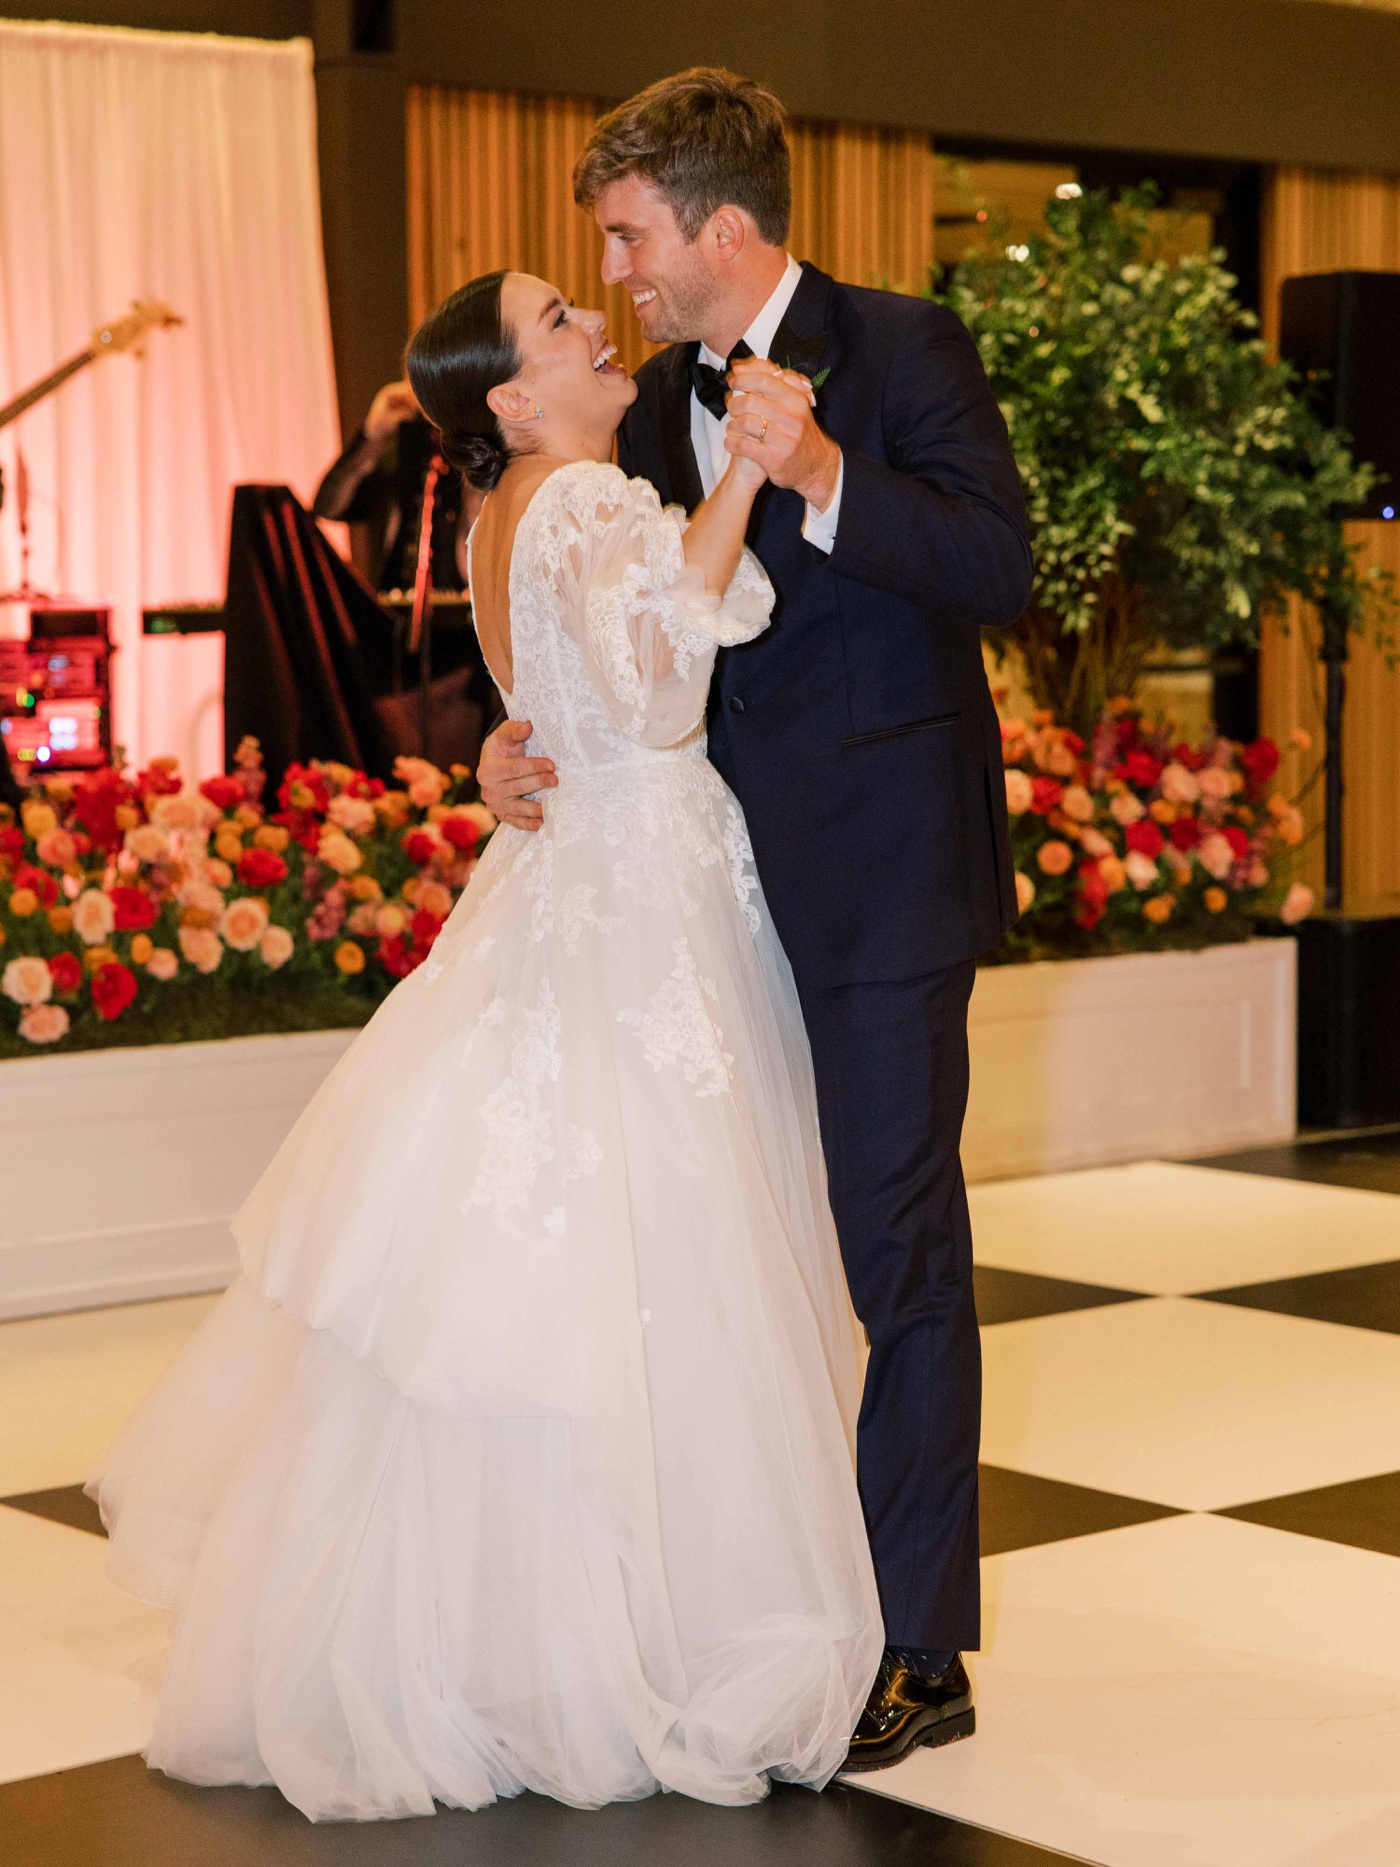 Bride and groom sharing their first dance at their San Antonio Botanical Garden wedding reception